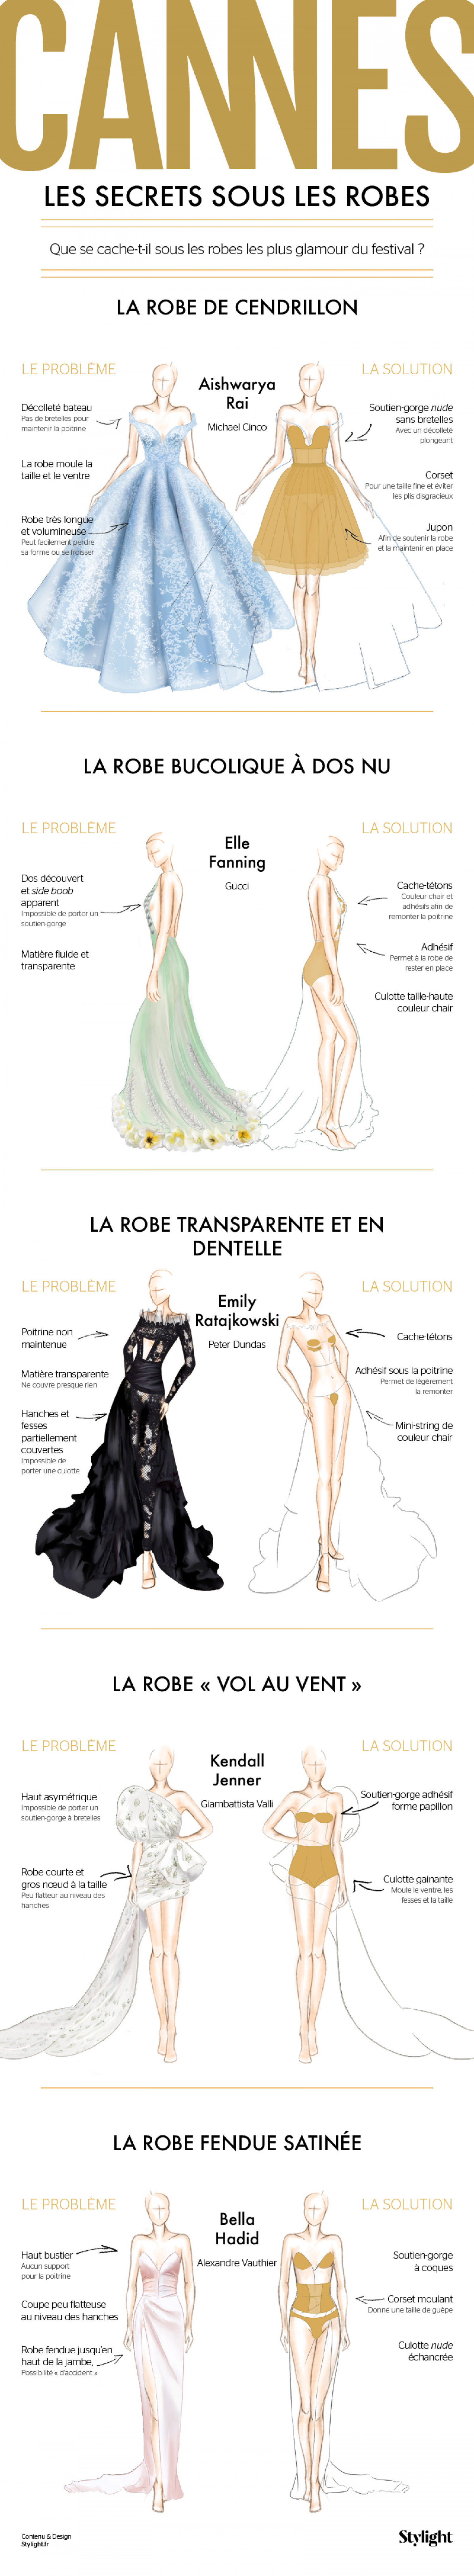 Cannes festival : the secrets under the dresses Infographic